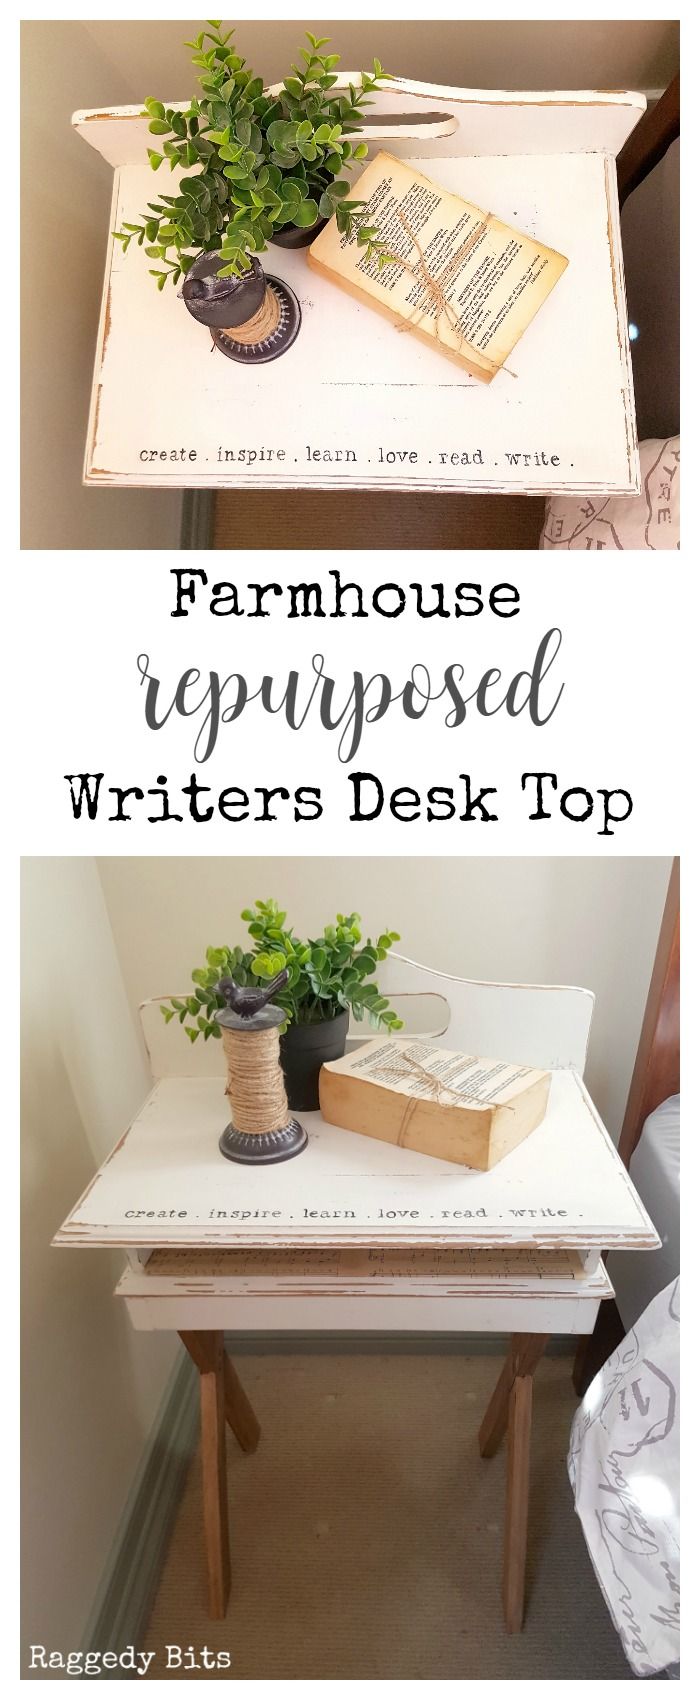 Farmhouse Repurposed Broken Writers Desk Top